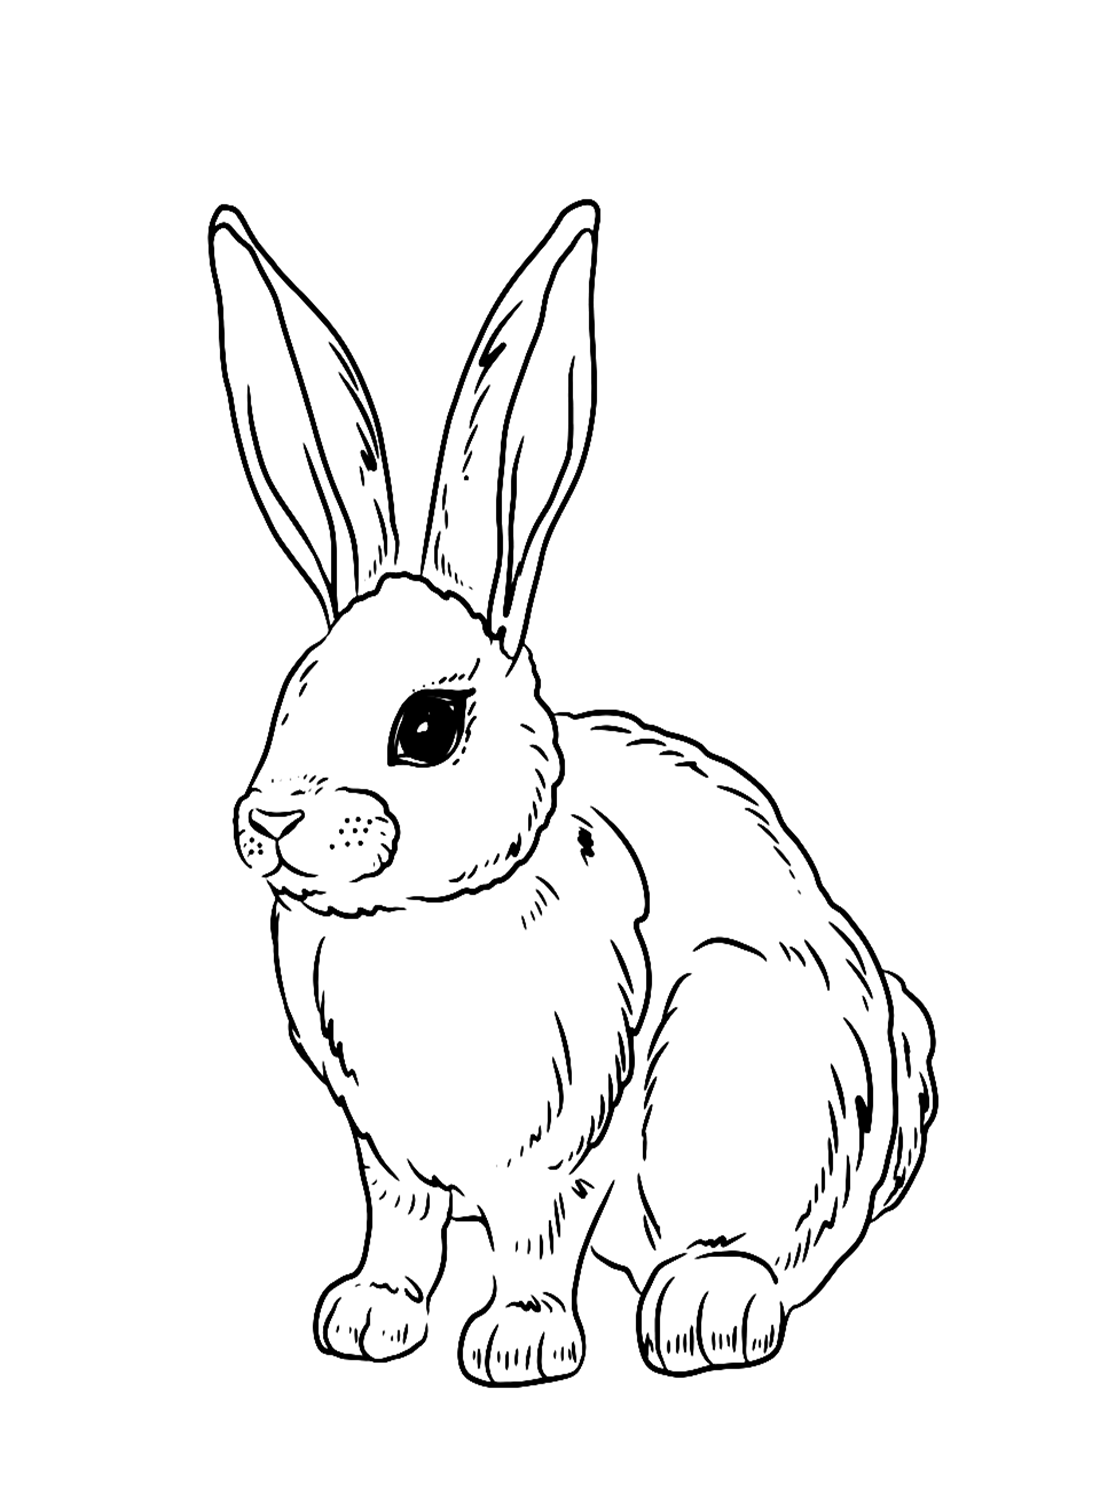 Realistic Rabbit from Rabbit